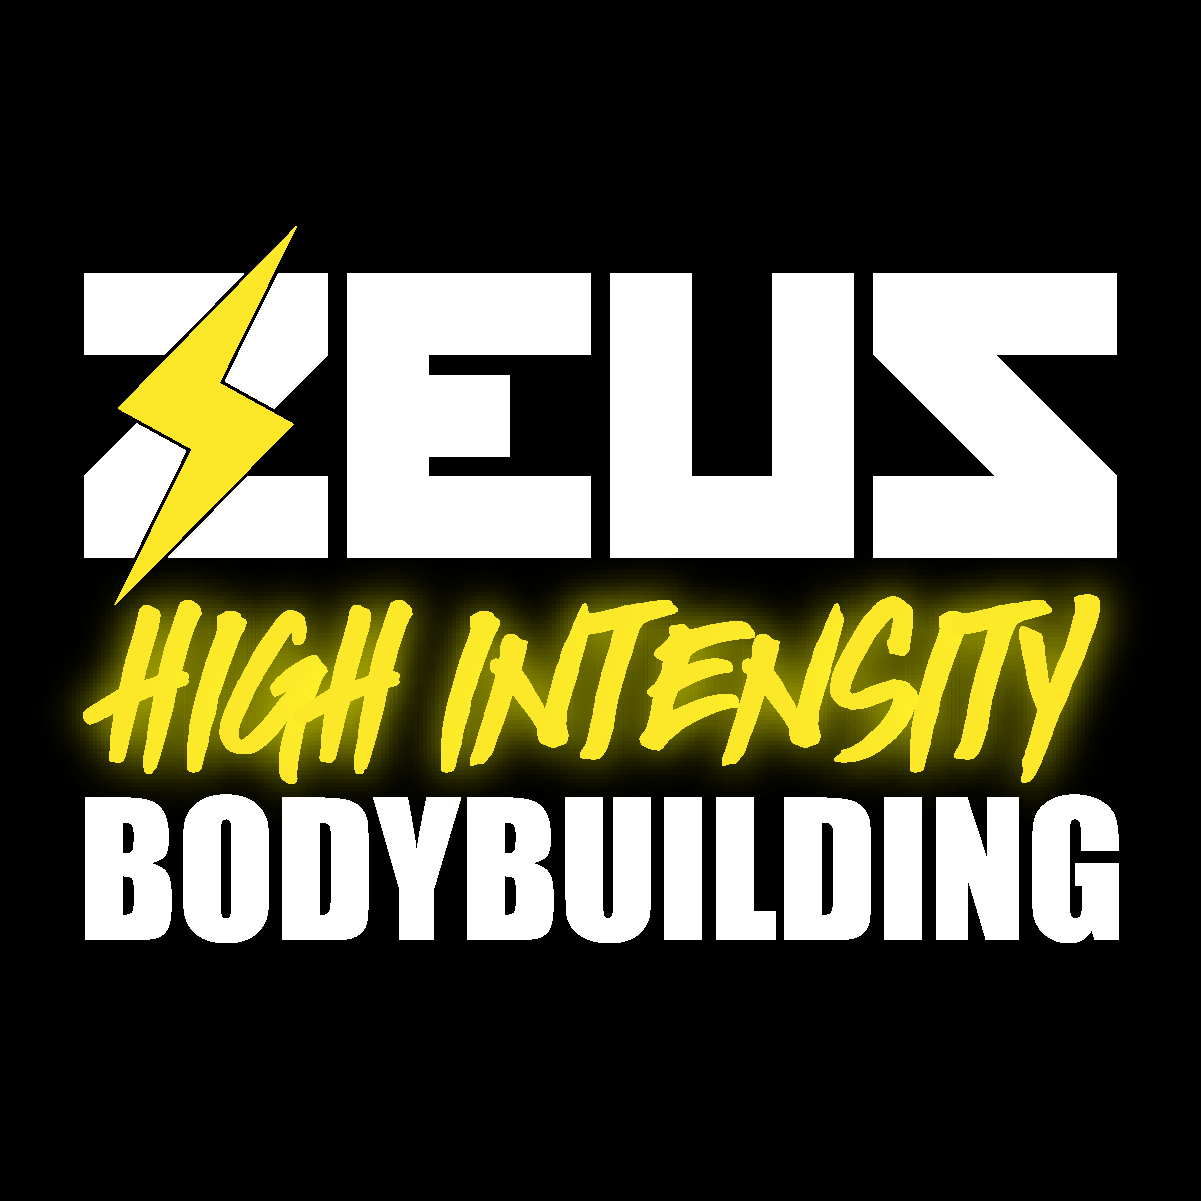 High Intensity Bodybuilding logo